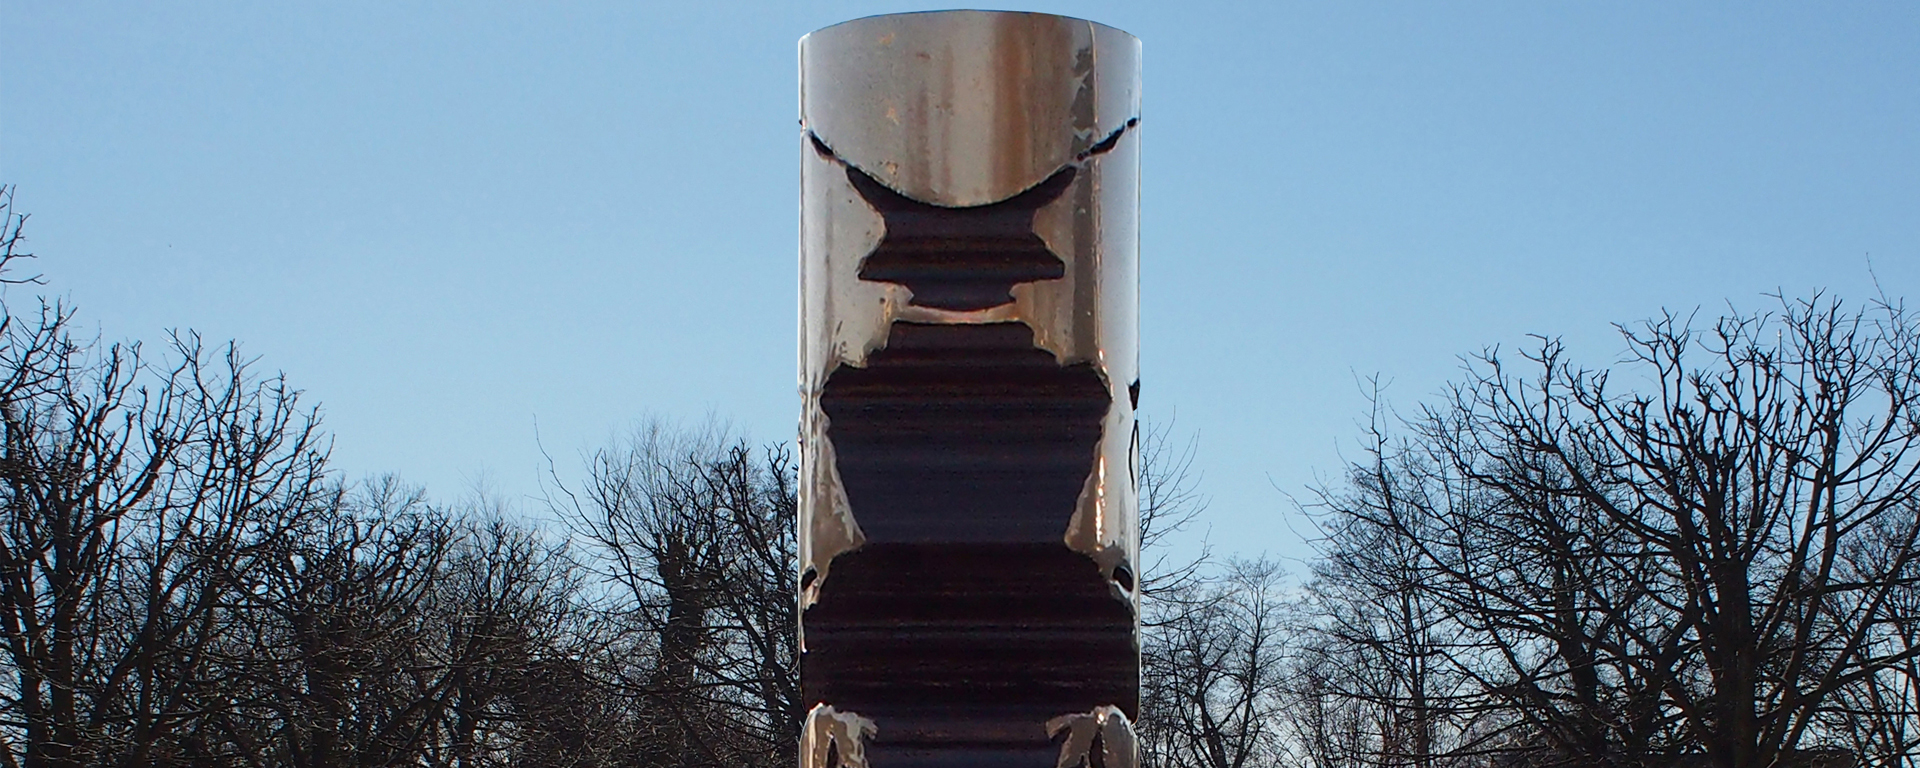 Monument to Jaan Poska — KADRIORG PARK